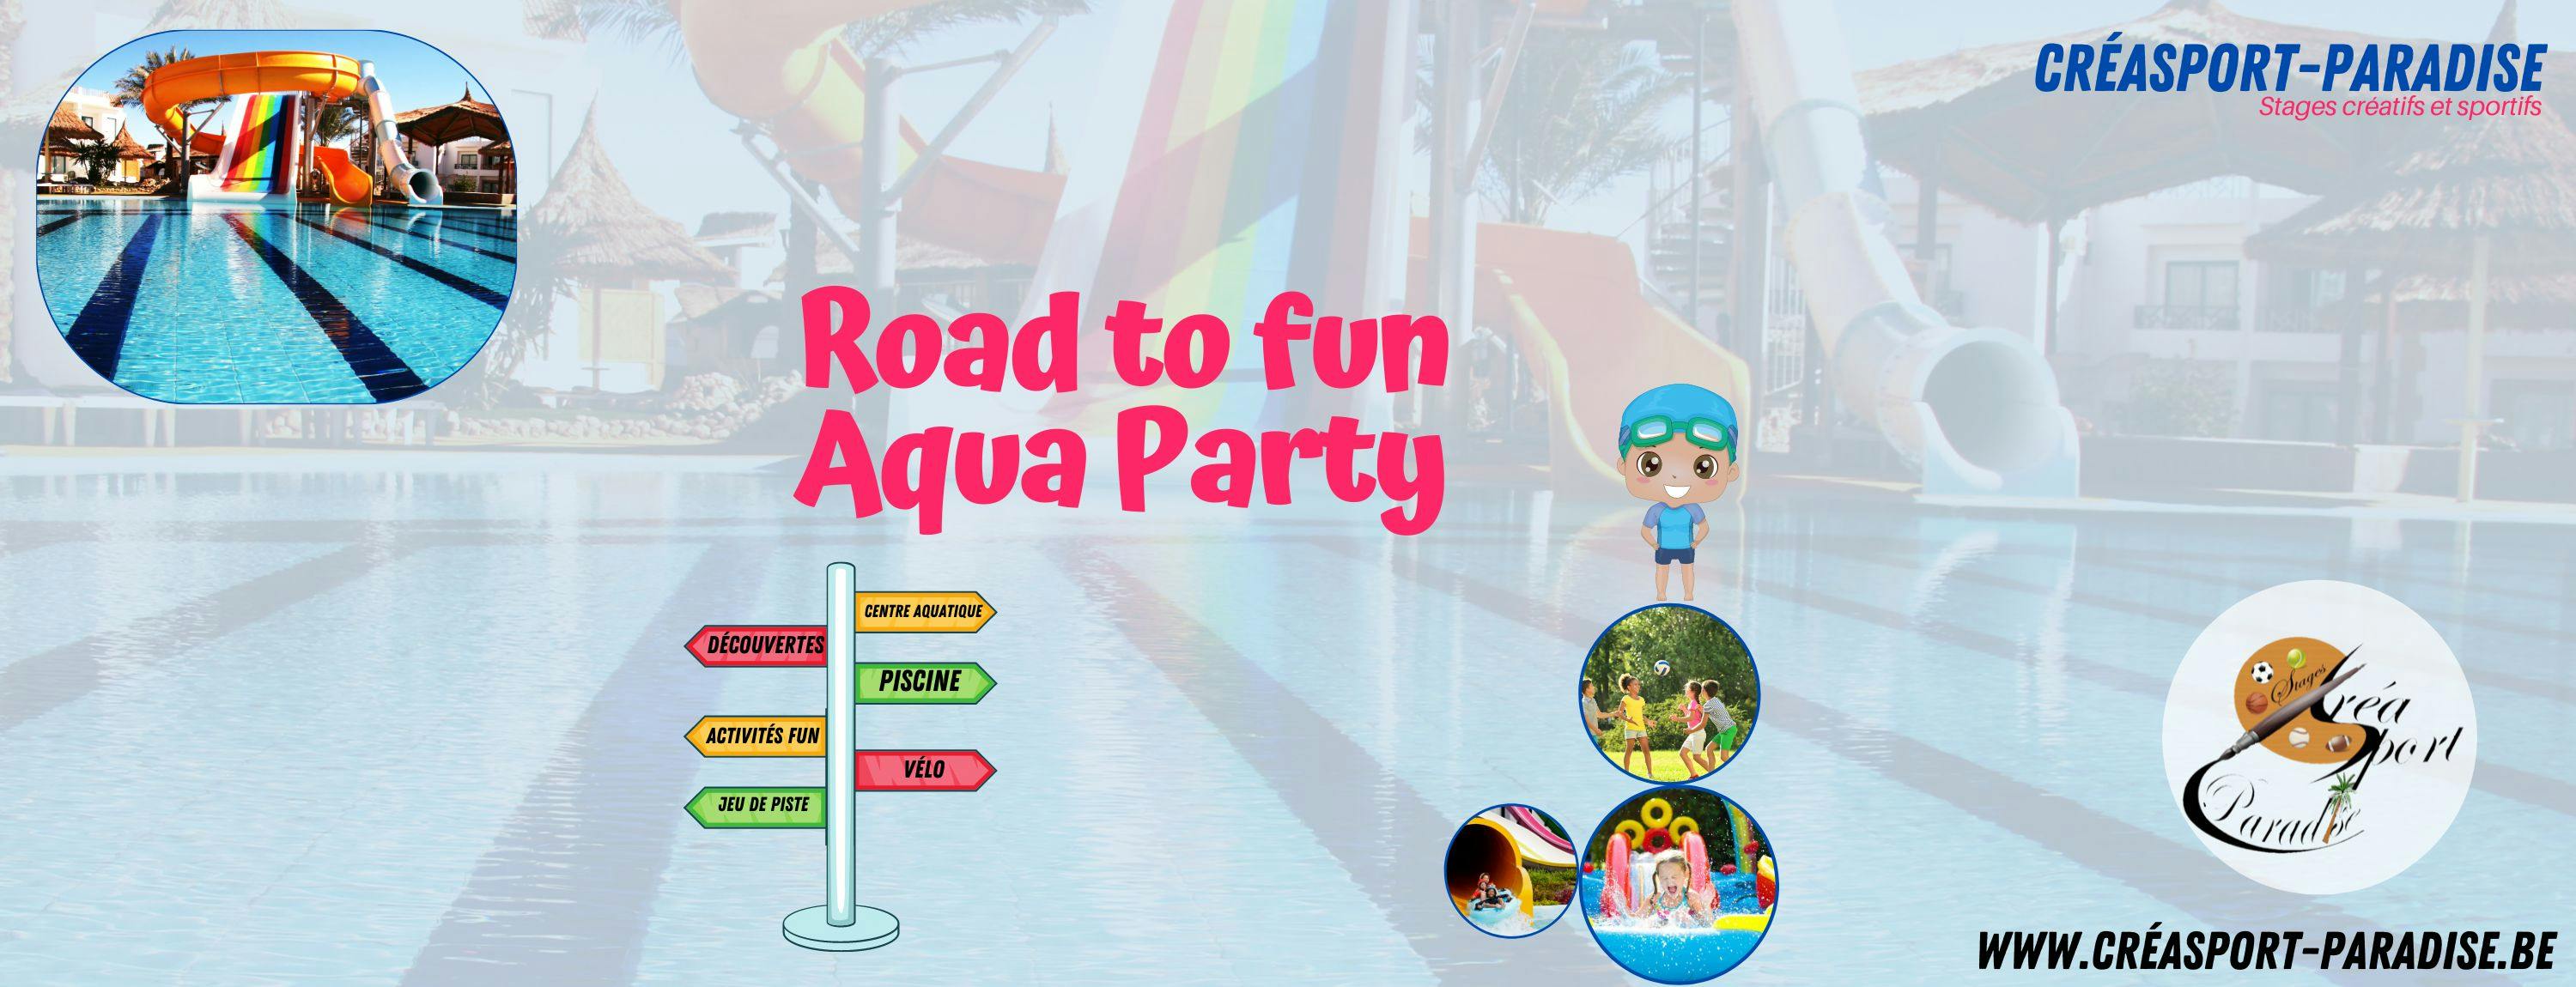 Automne S1 : Road to fun - Aqua party NEW